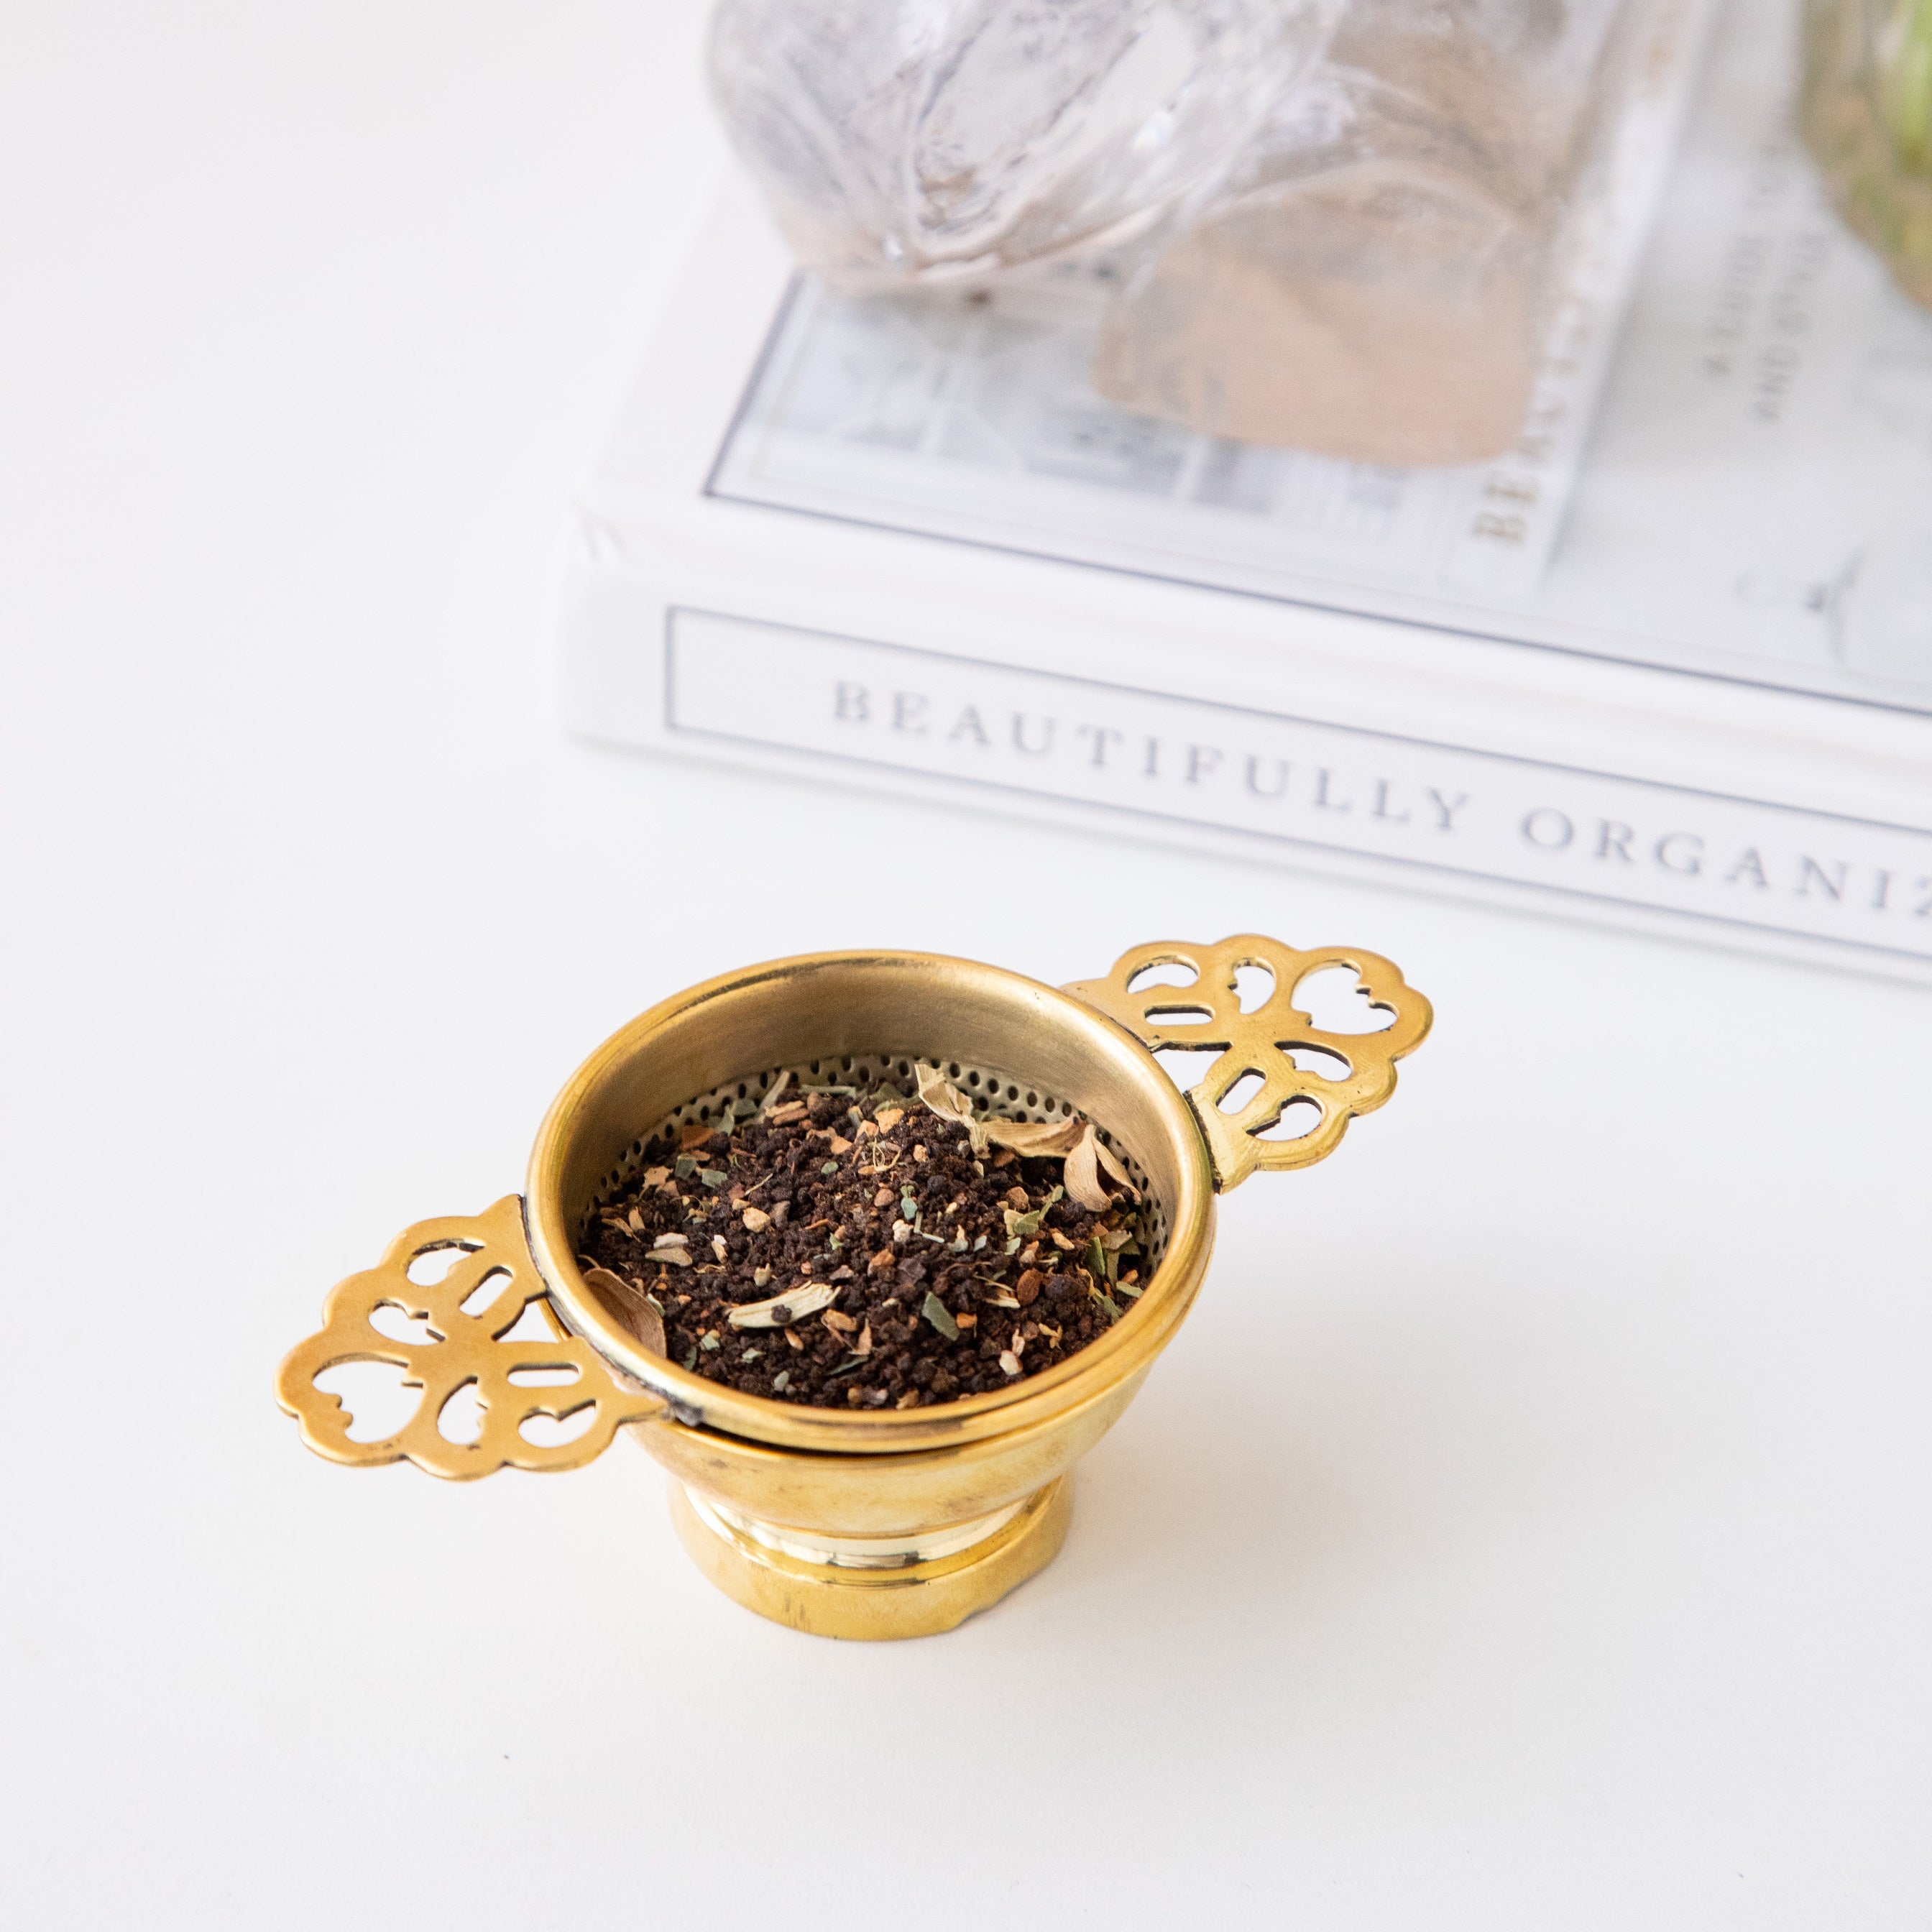 Empress Brass tea strainer ( 5 cms )